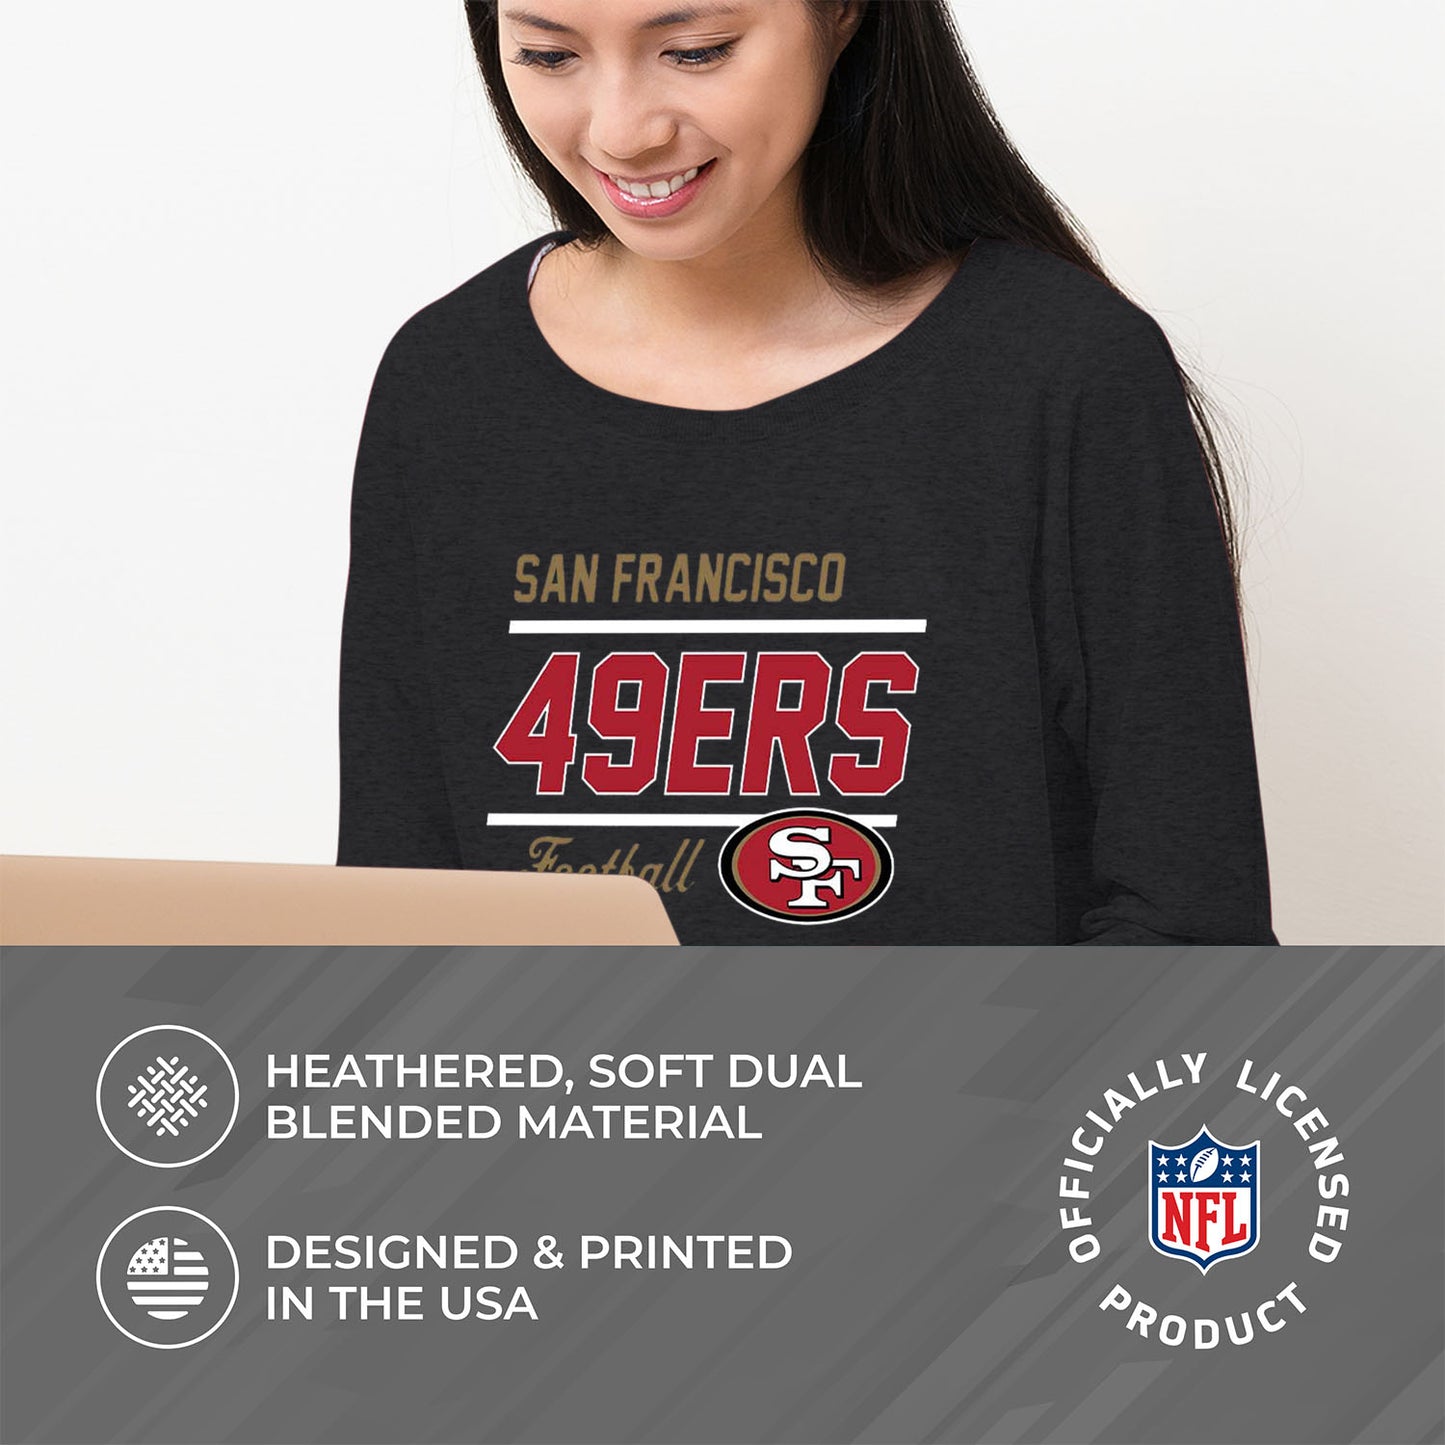 San Francisco 49ers NFL Womens Crew Neck Light Weight - Charcoal